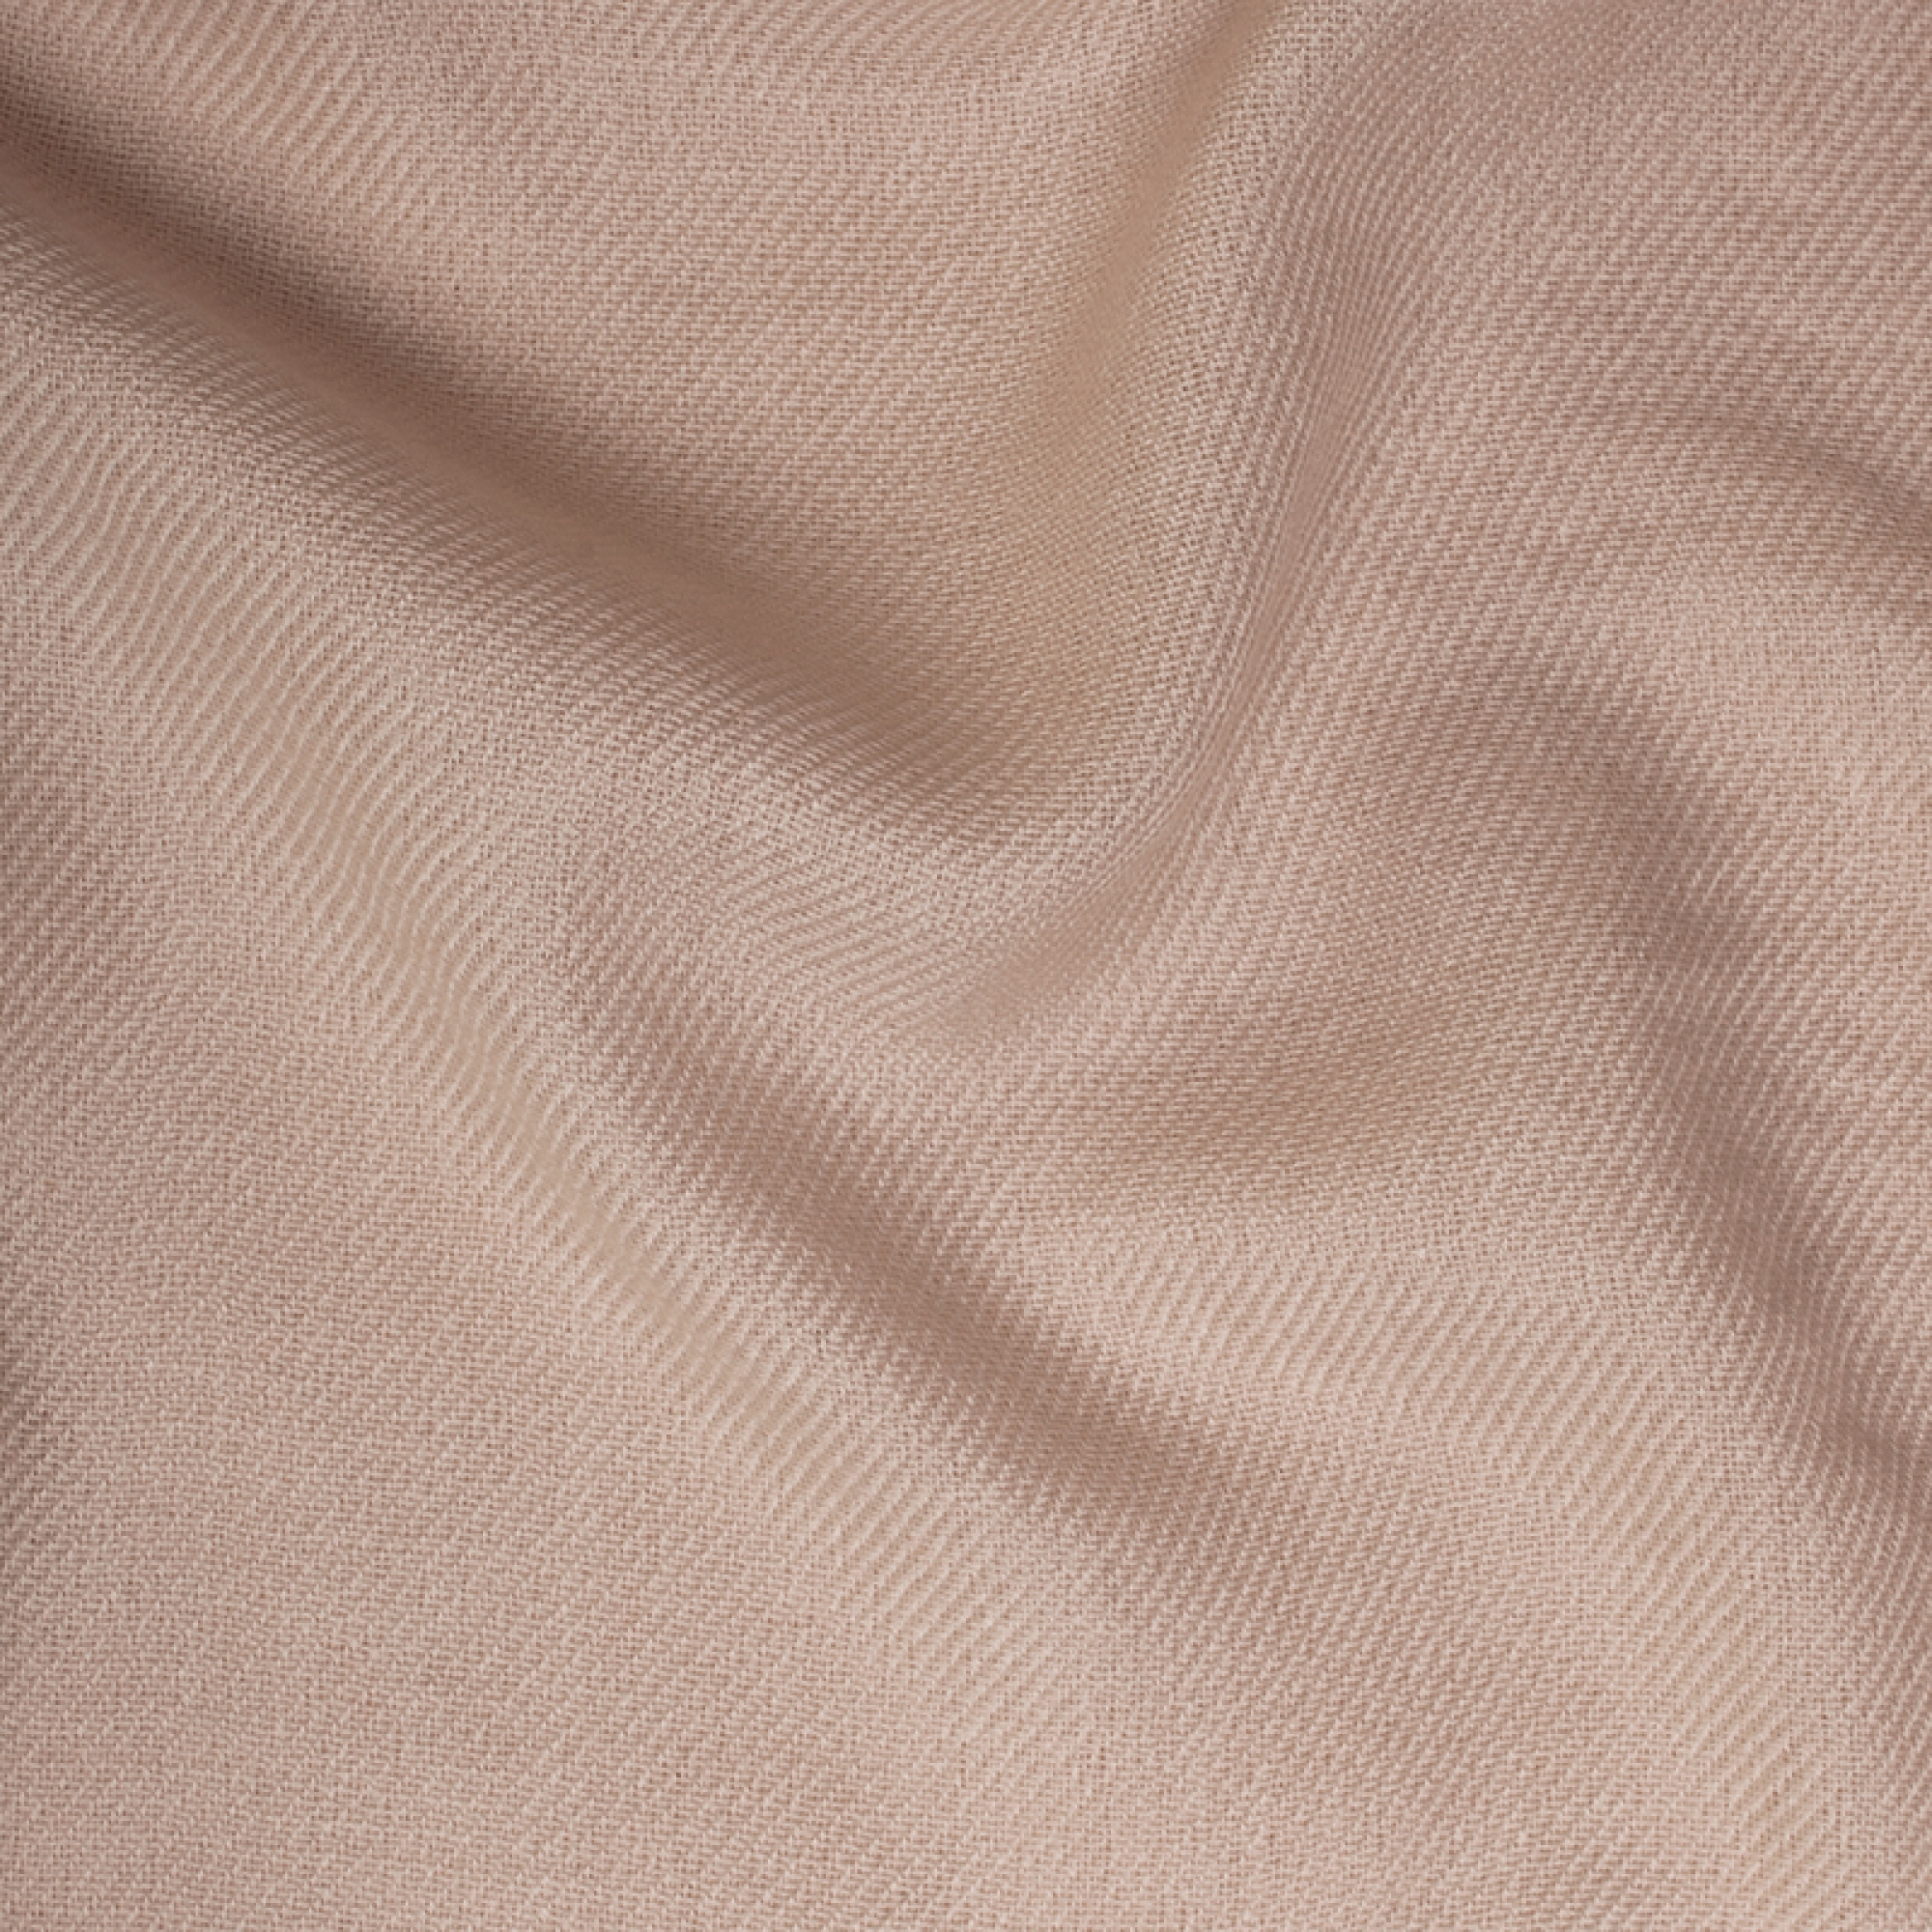 Cashmere accessories blanket toodoo plain xl 240 x 260 crystal grey 240 x 260 cm